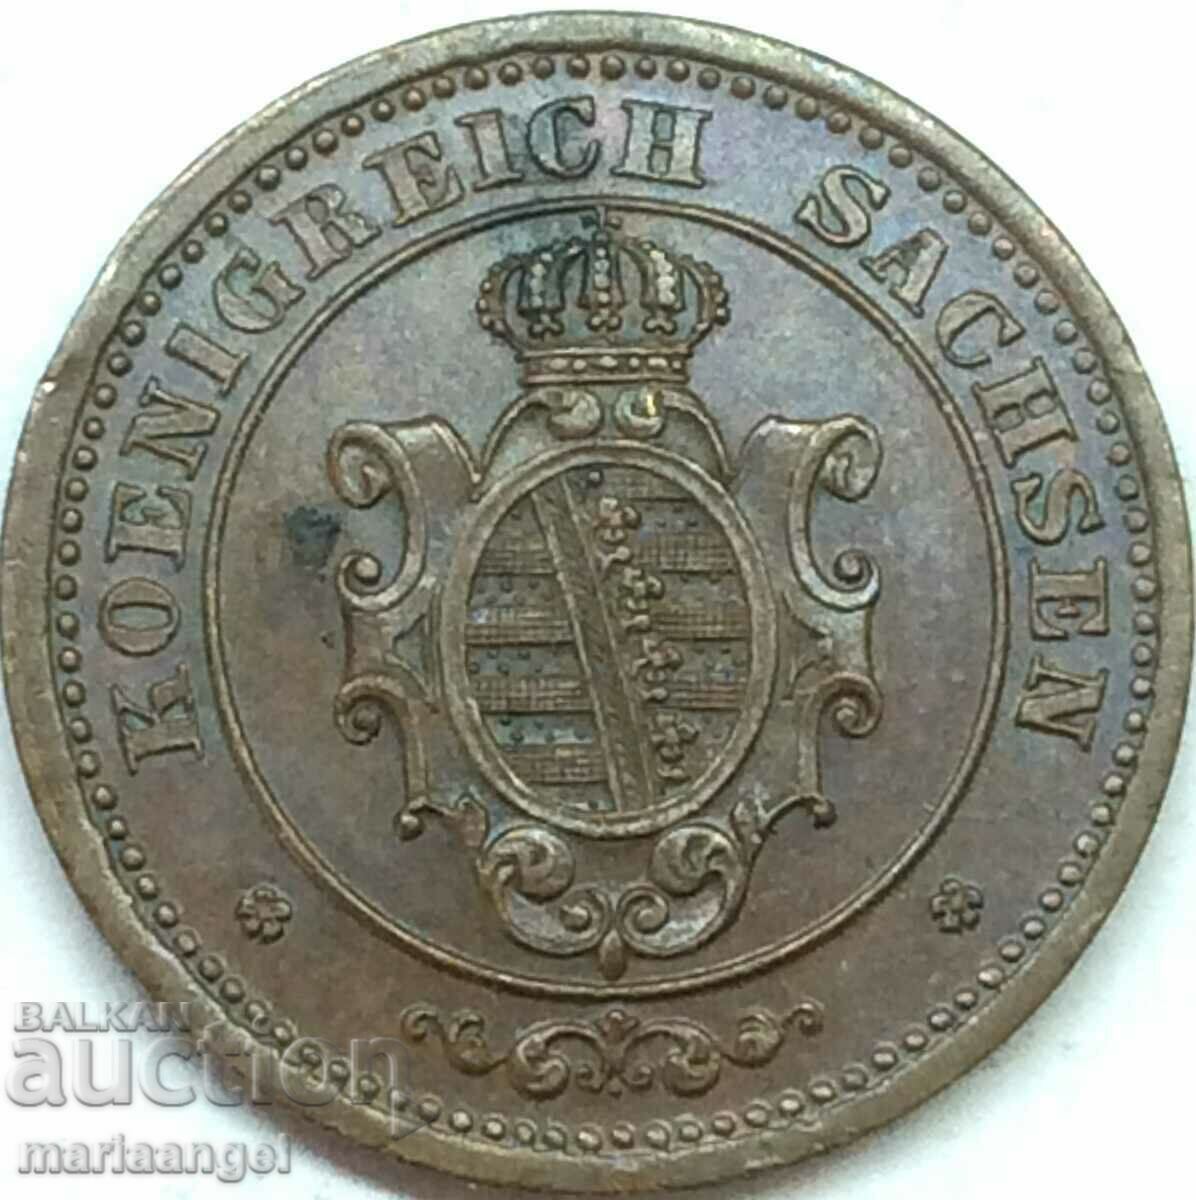 Saxony 2 Pfennig 1866 Germany - Quality!